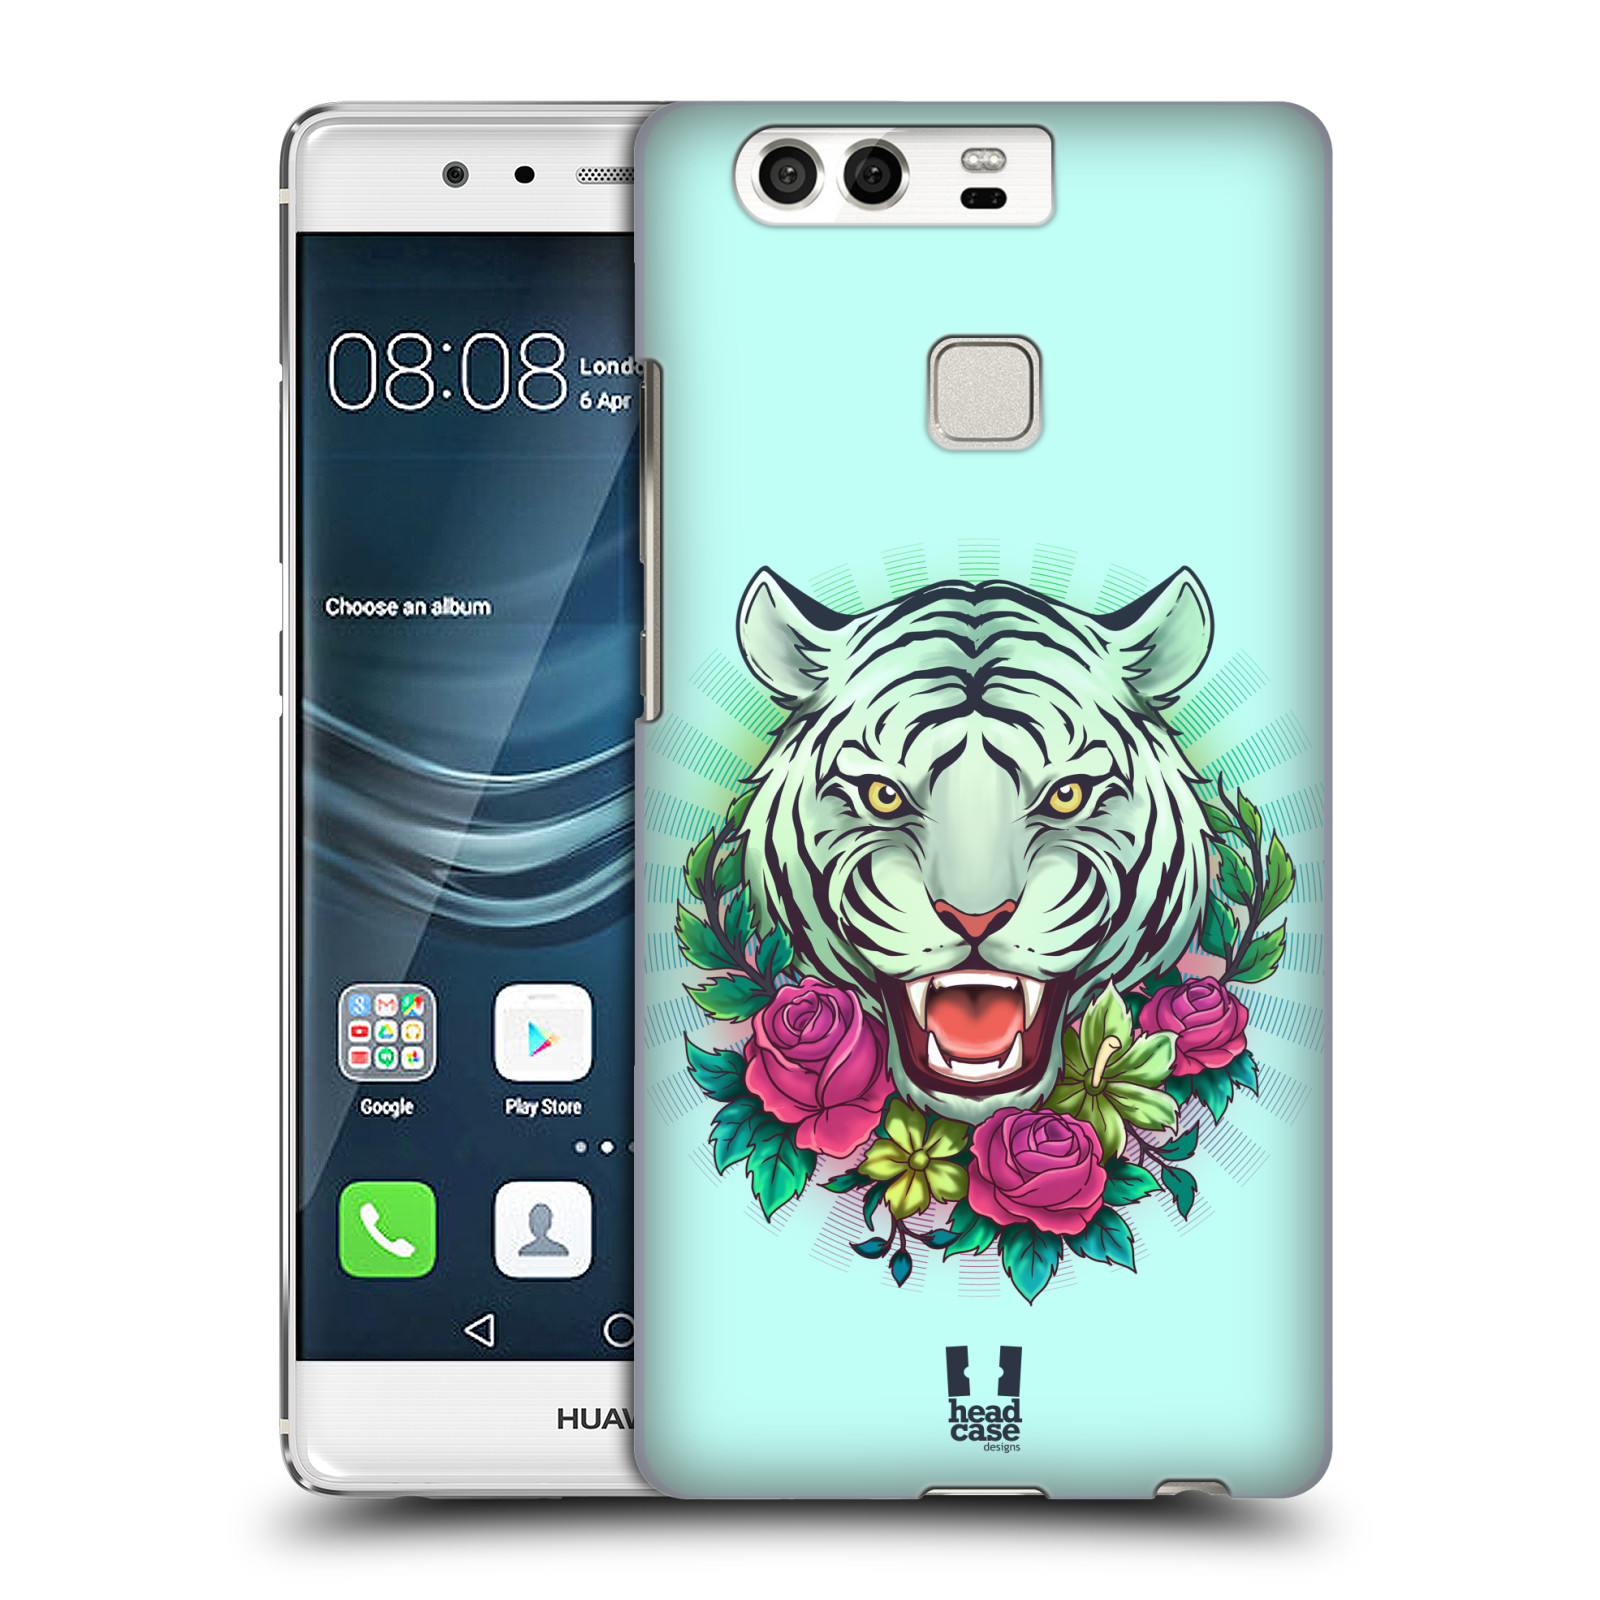 HEAD CASE plastový obal na mobil Huawei P9 / P9 DUAL SIM vzor Flóra a Fauna tygr